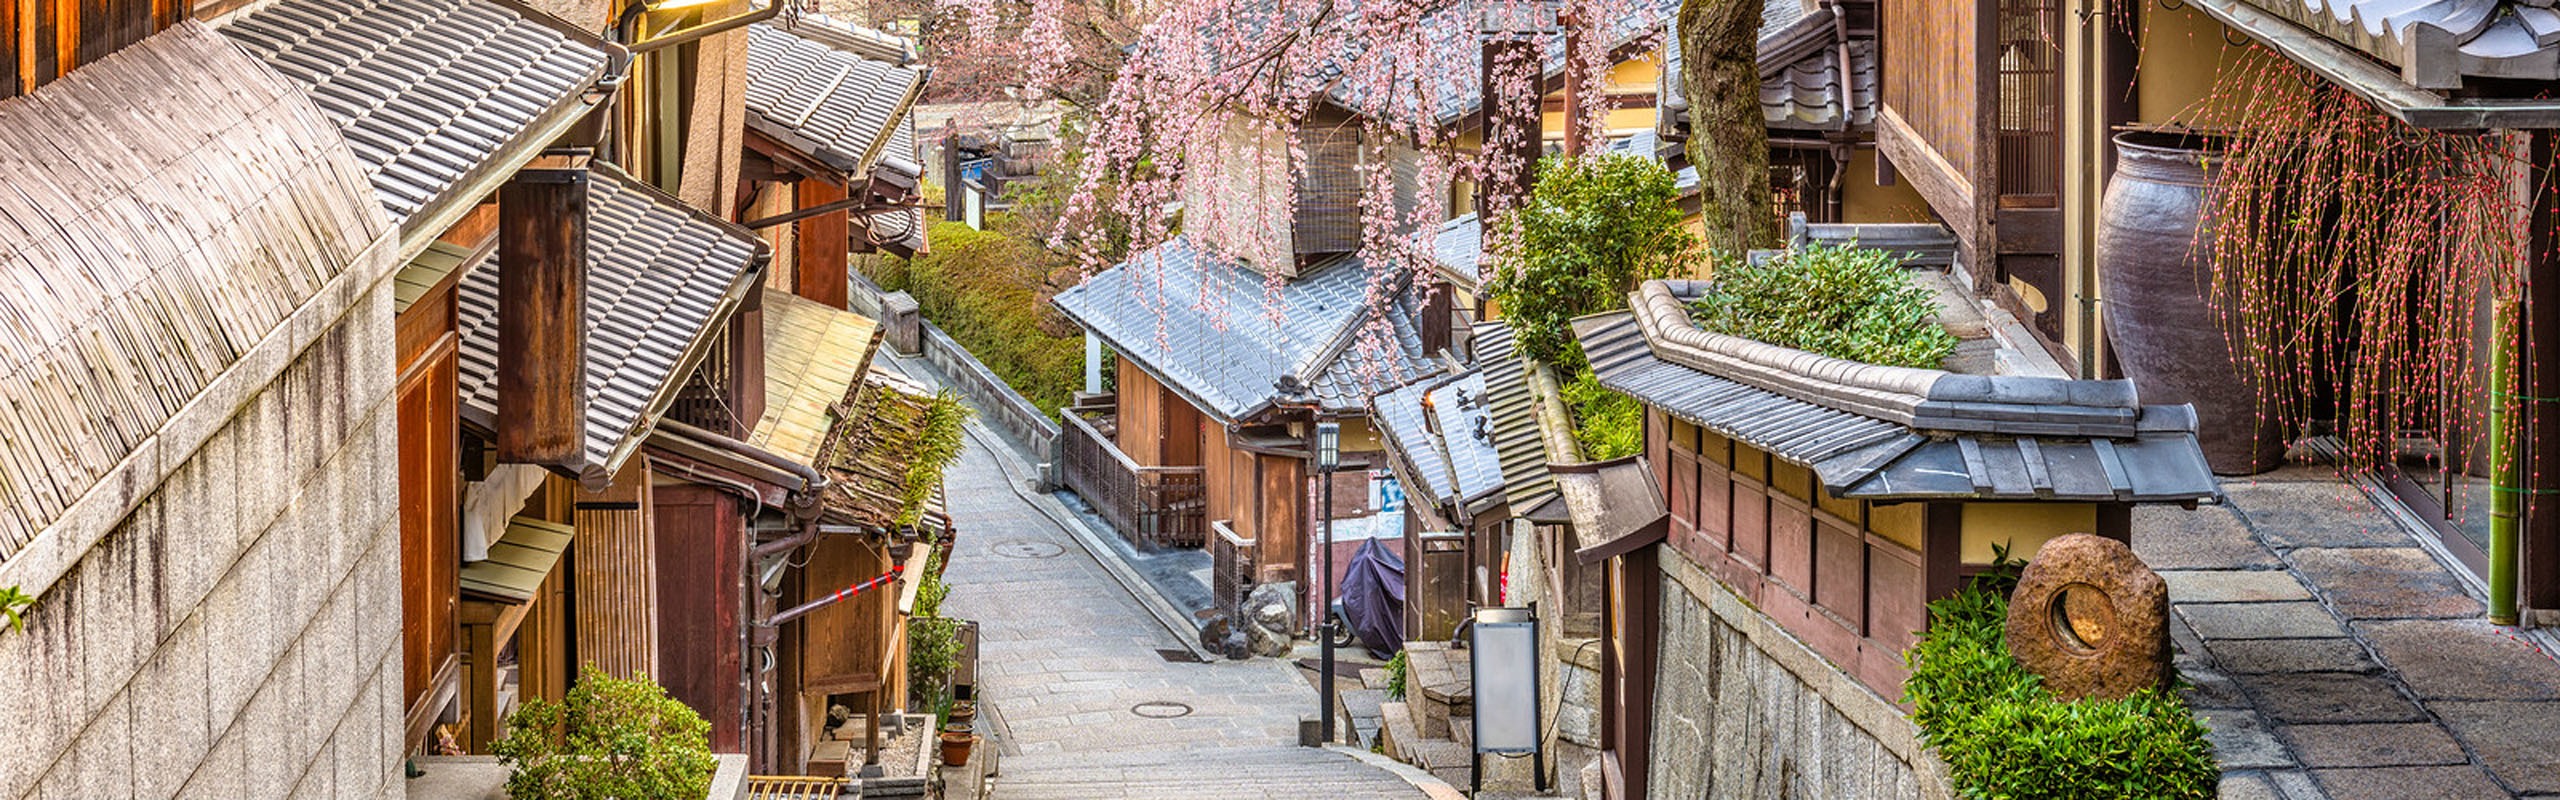 Landscape of Japan - Thousands of Onsens to Enjoy 